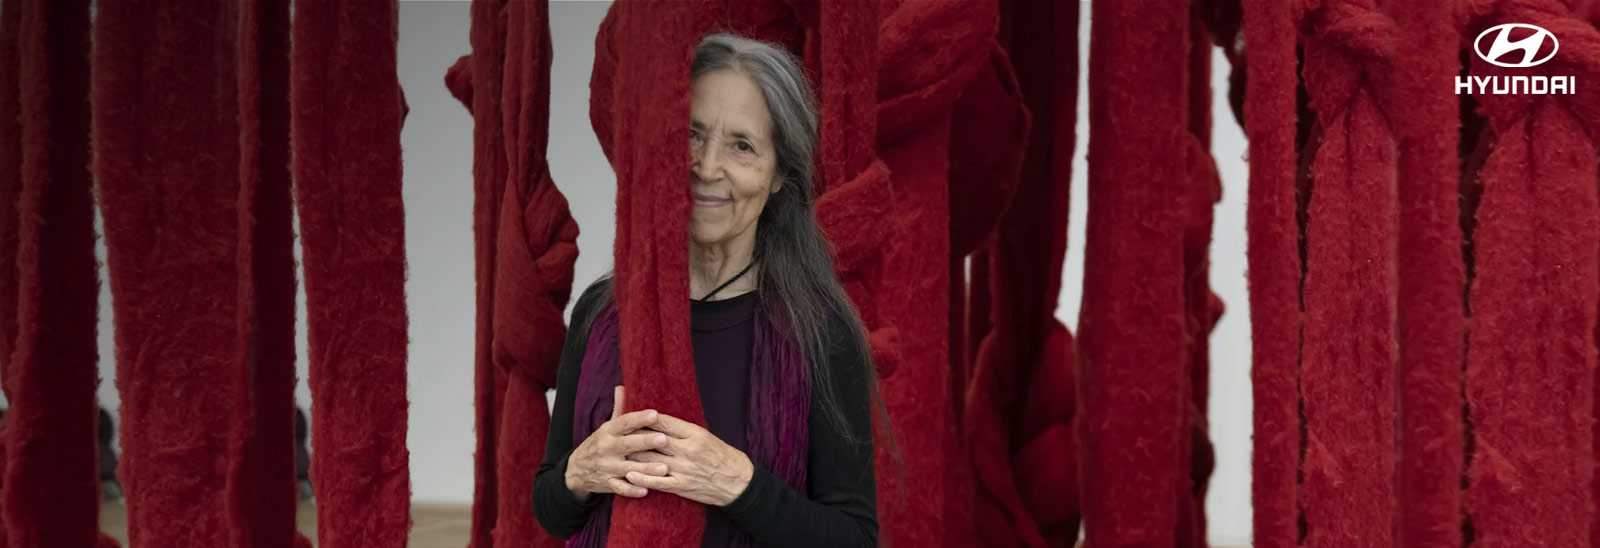 Cecilia Vicuña abrazando tiras de tela colgadas color rojo